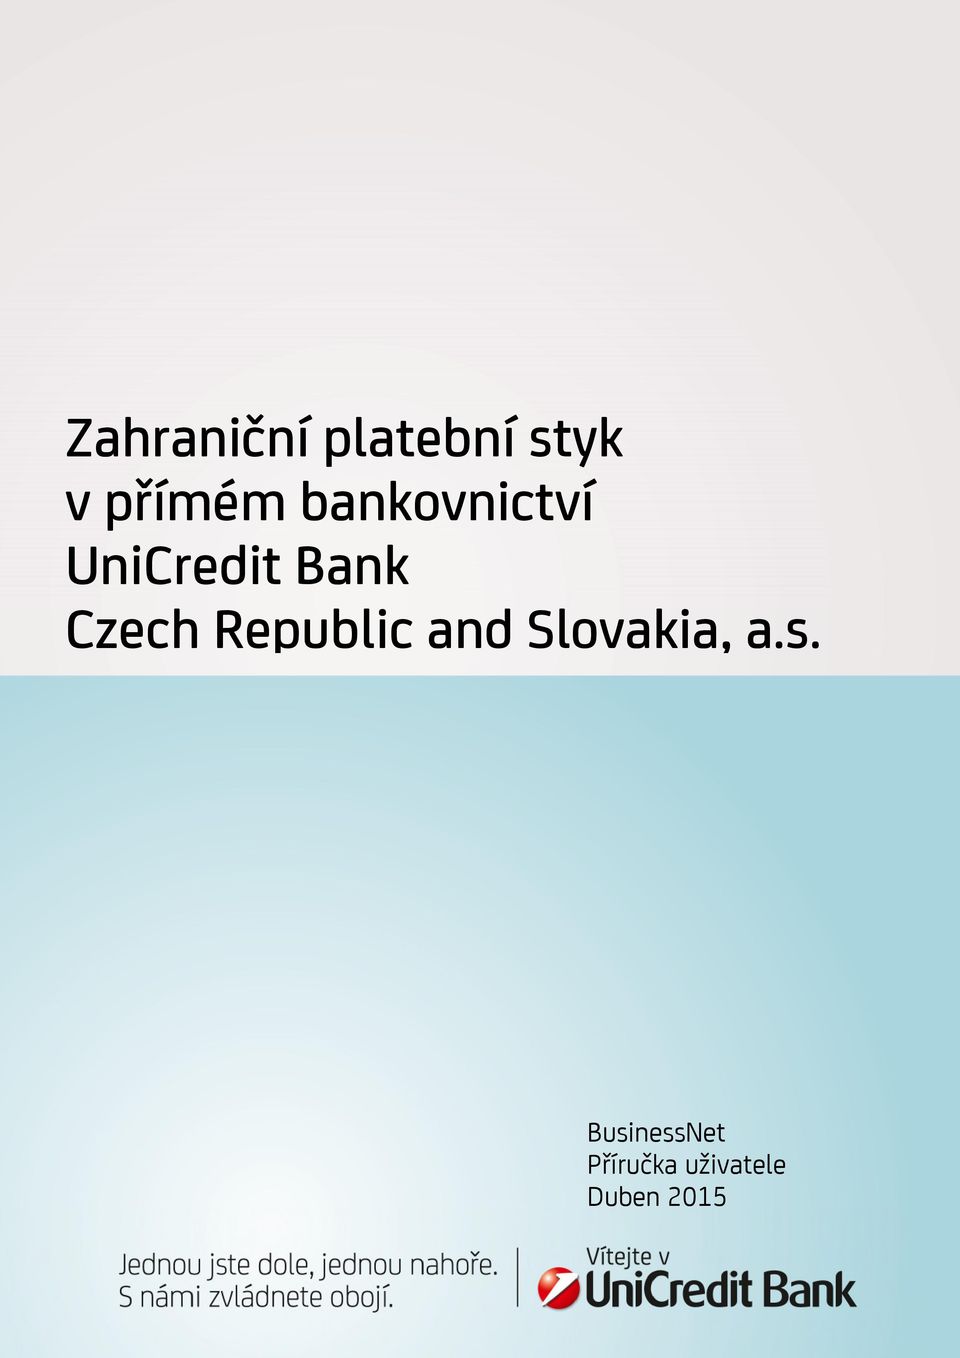 Republic and Slovakia, a.s.